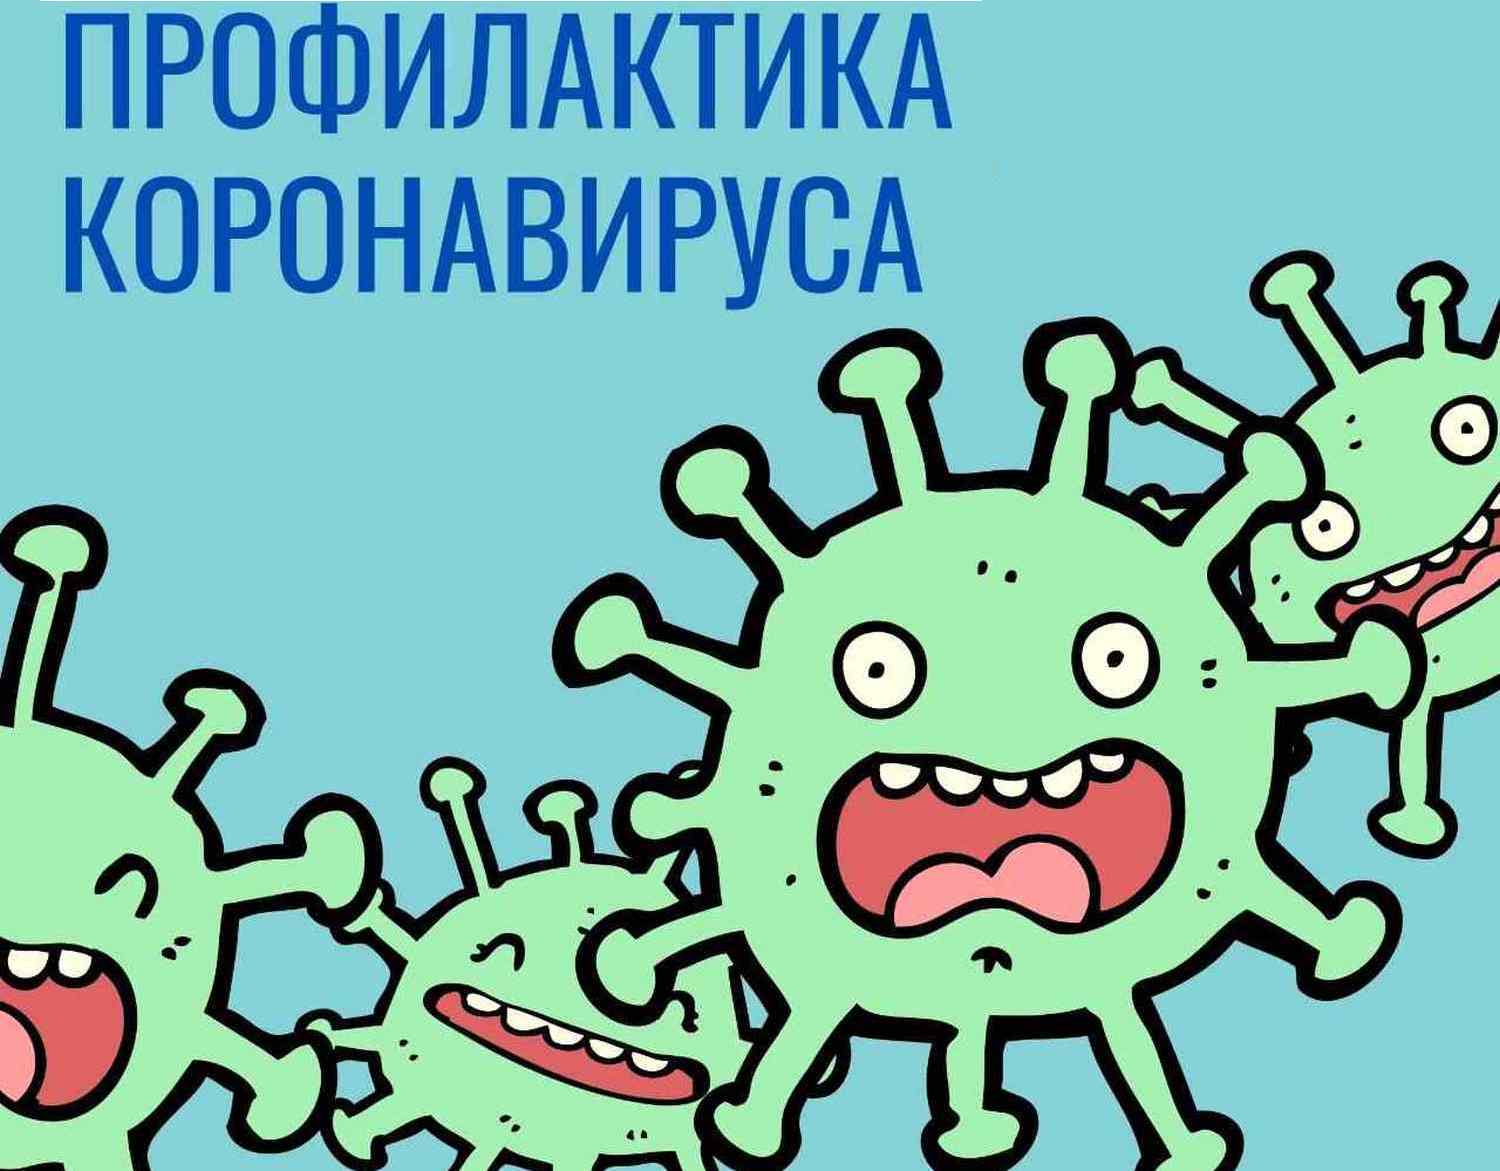 Лозунги про коронавирус